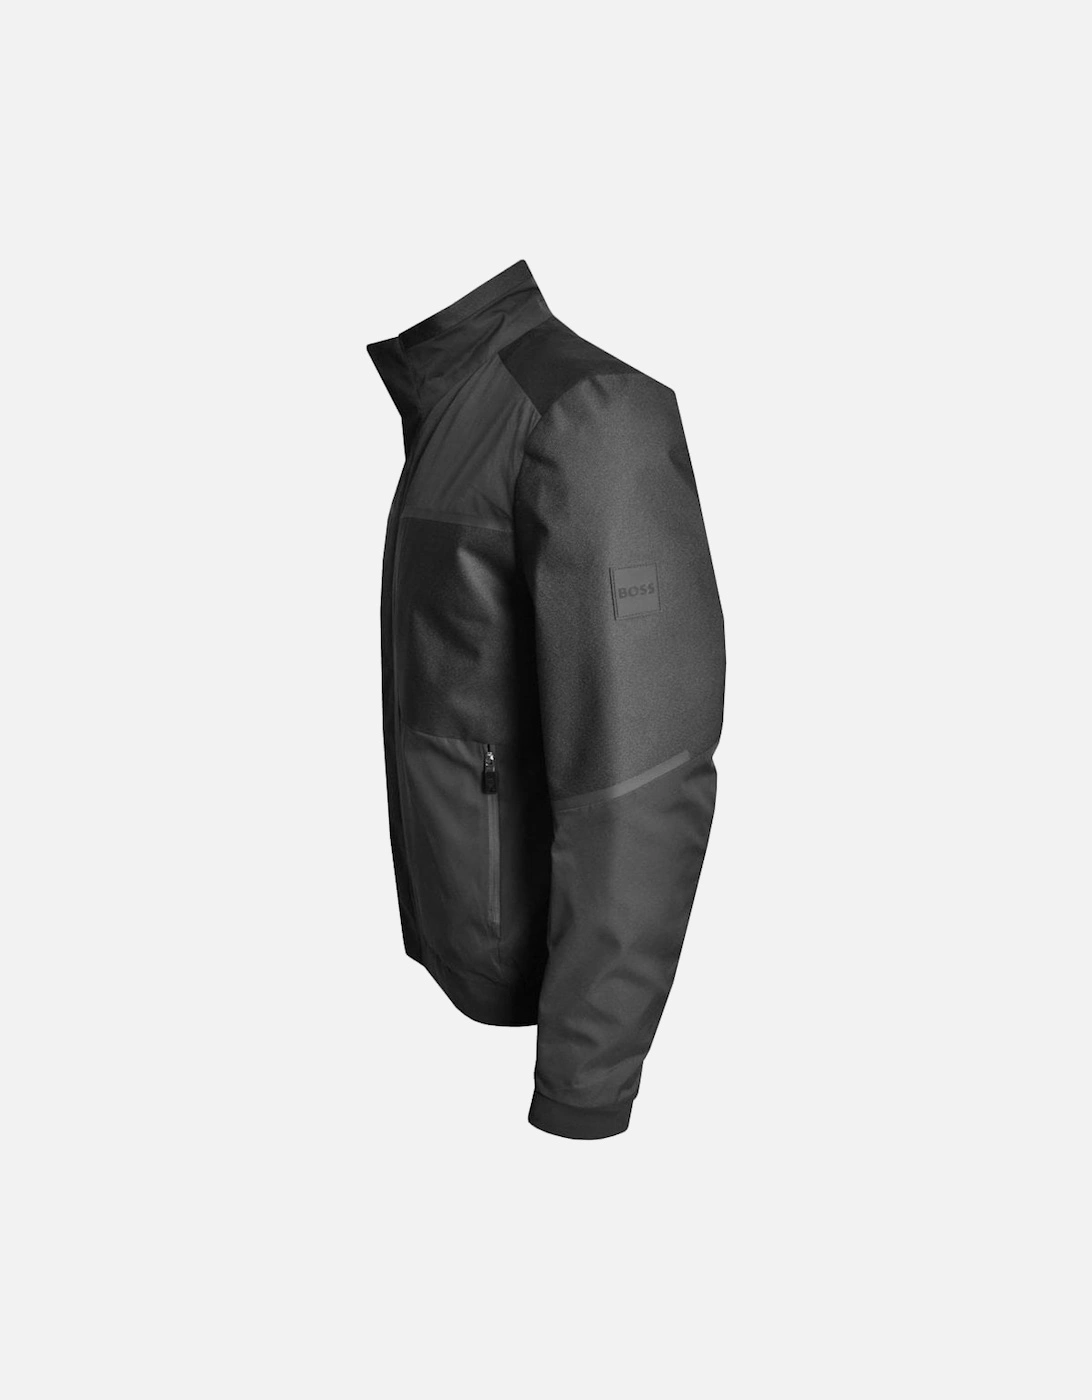 Men's Black Water Resistant J_Kvill Jacket.